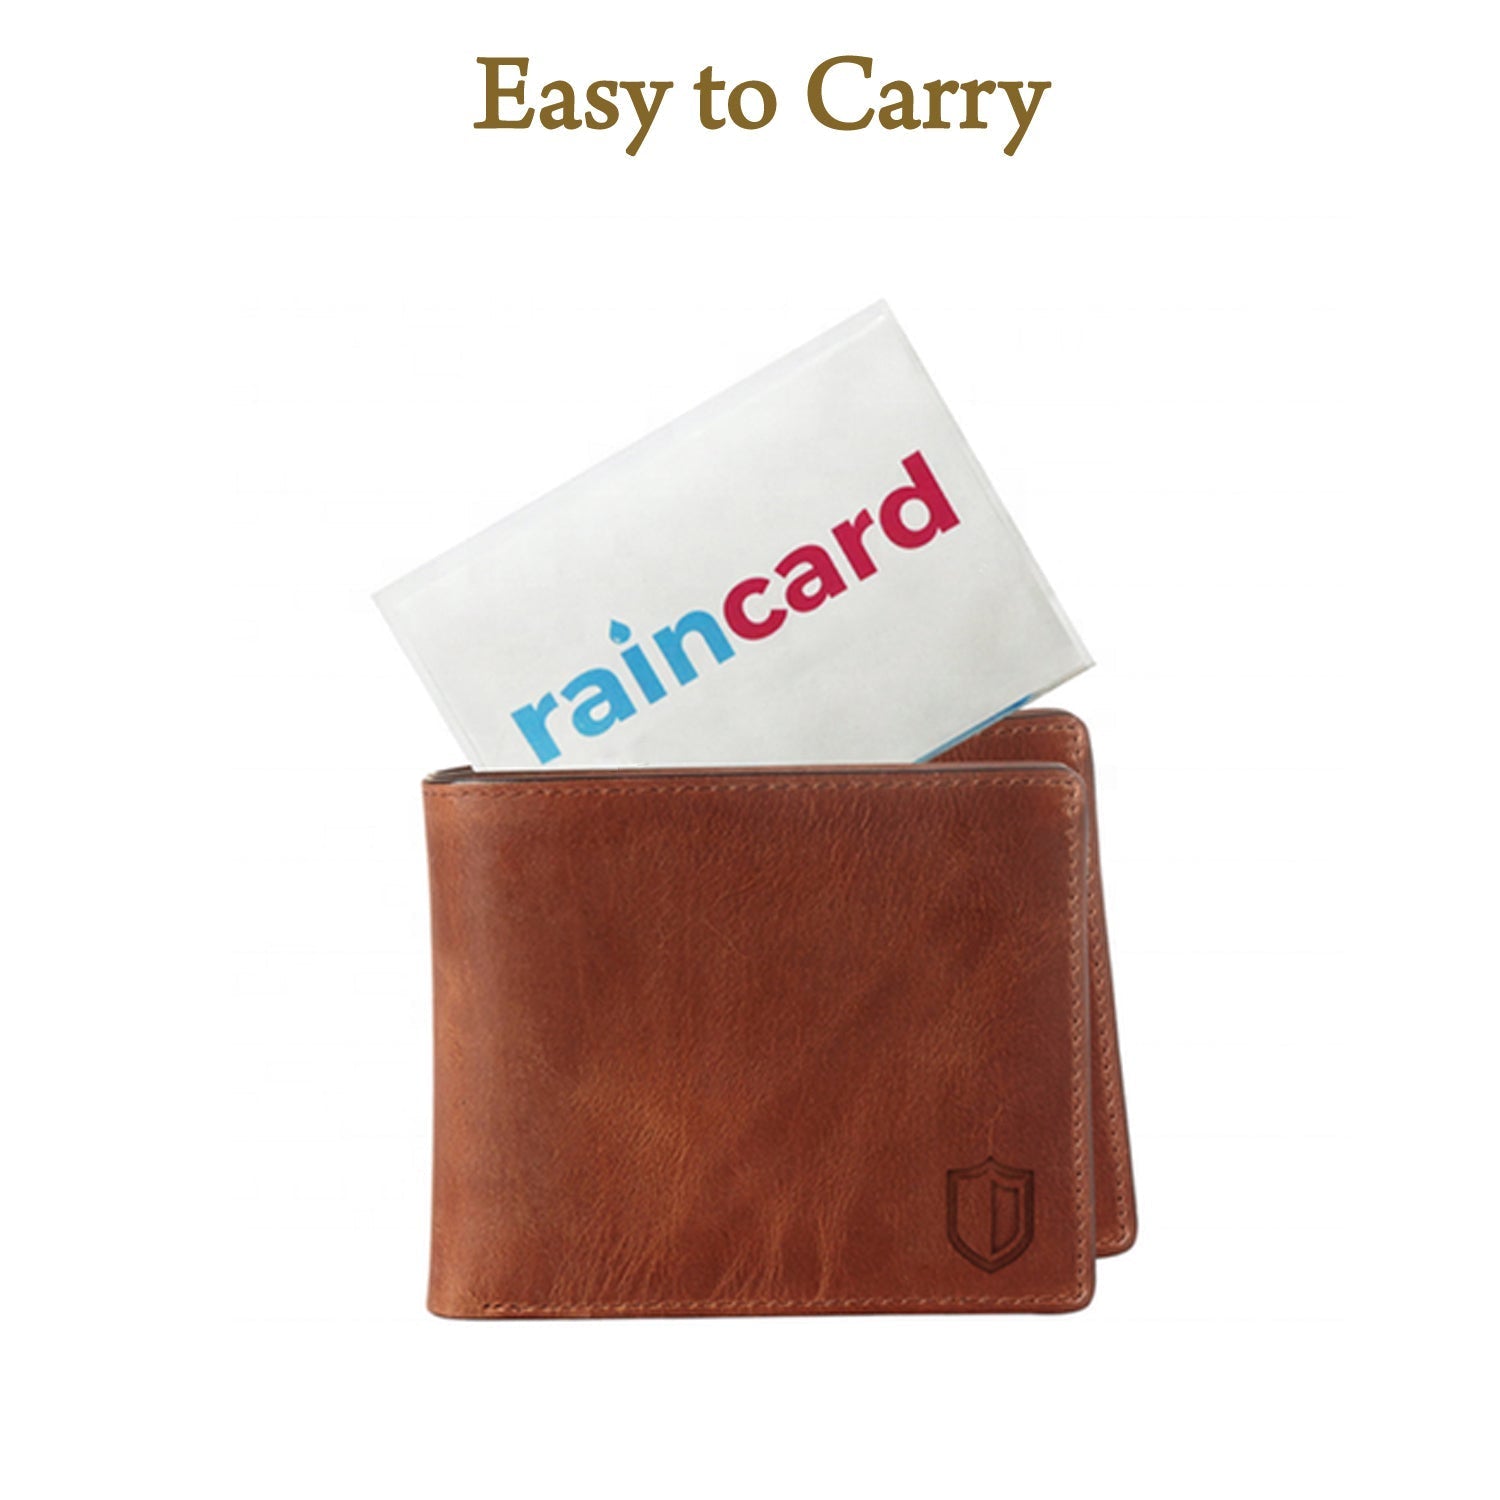 1425A Easy to Carry Emergency Waterproof Rain coat pouch 